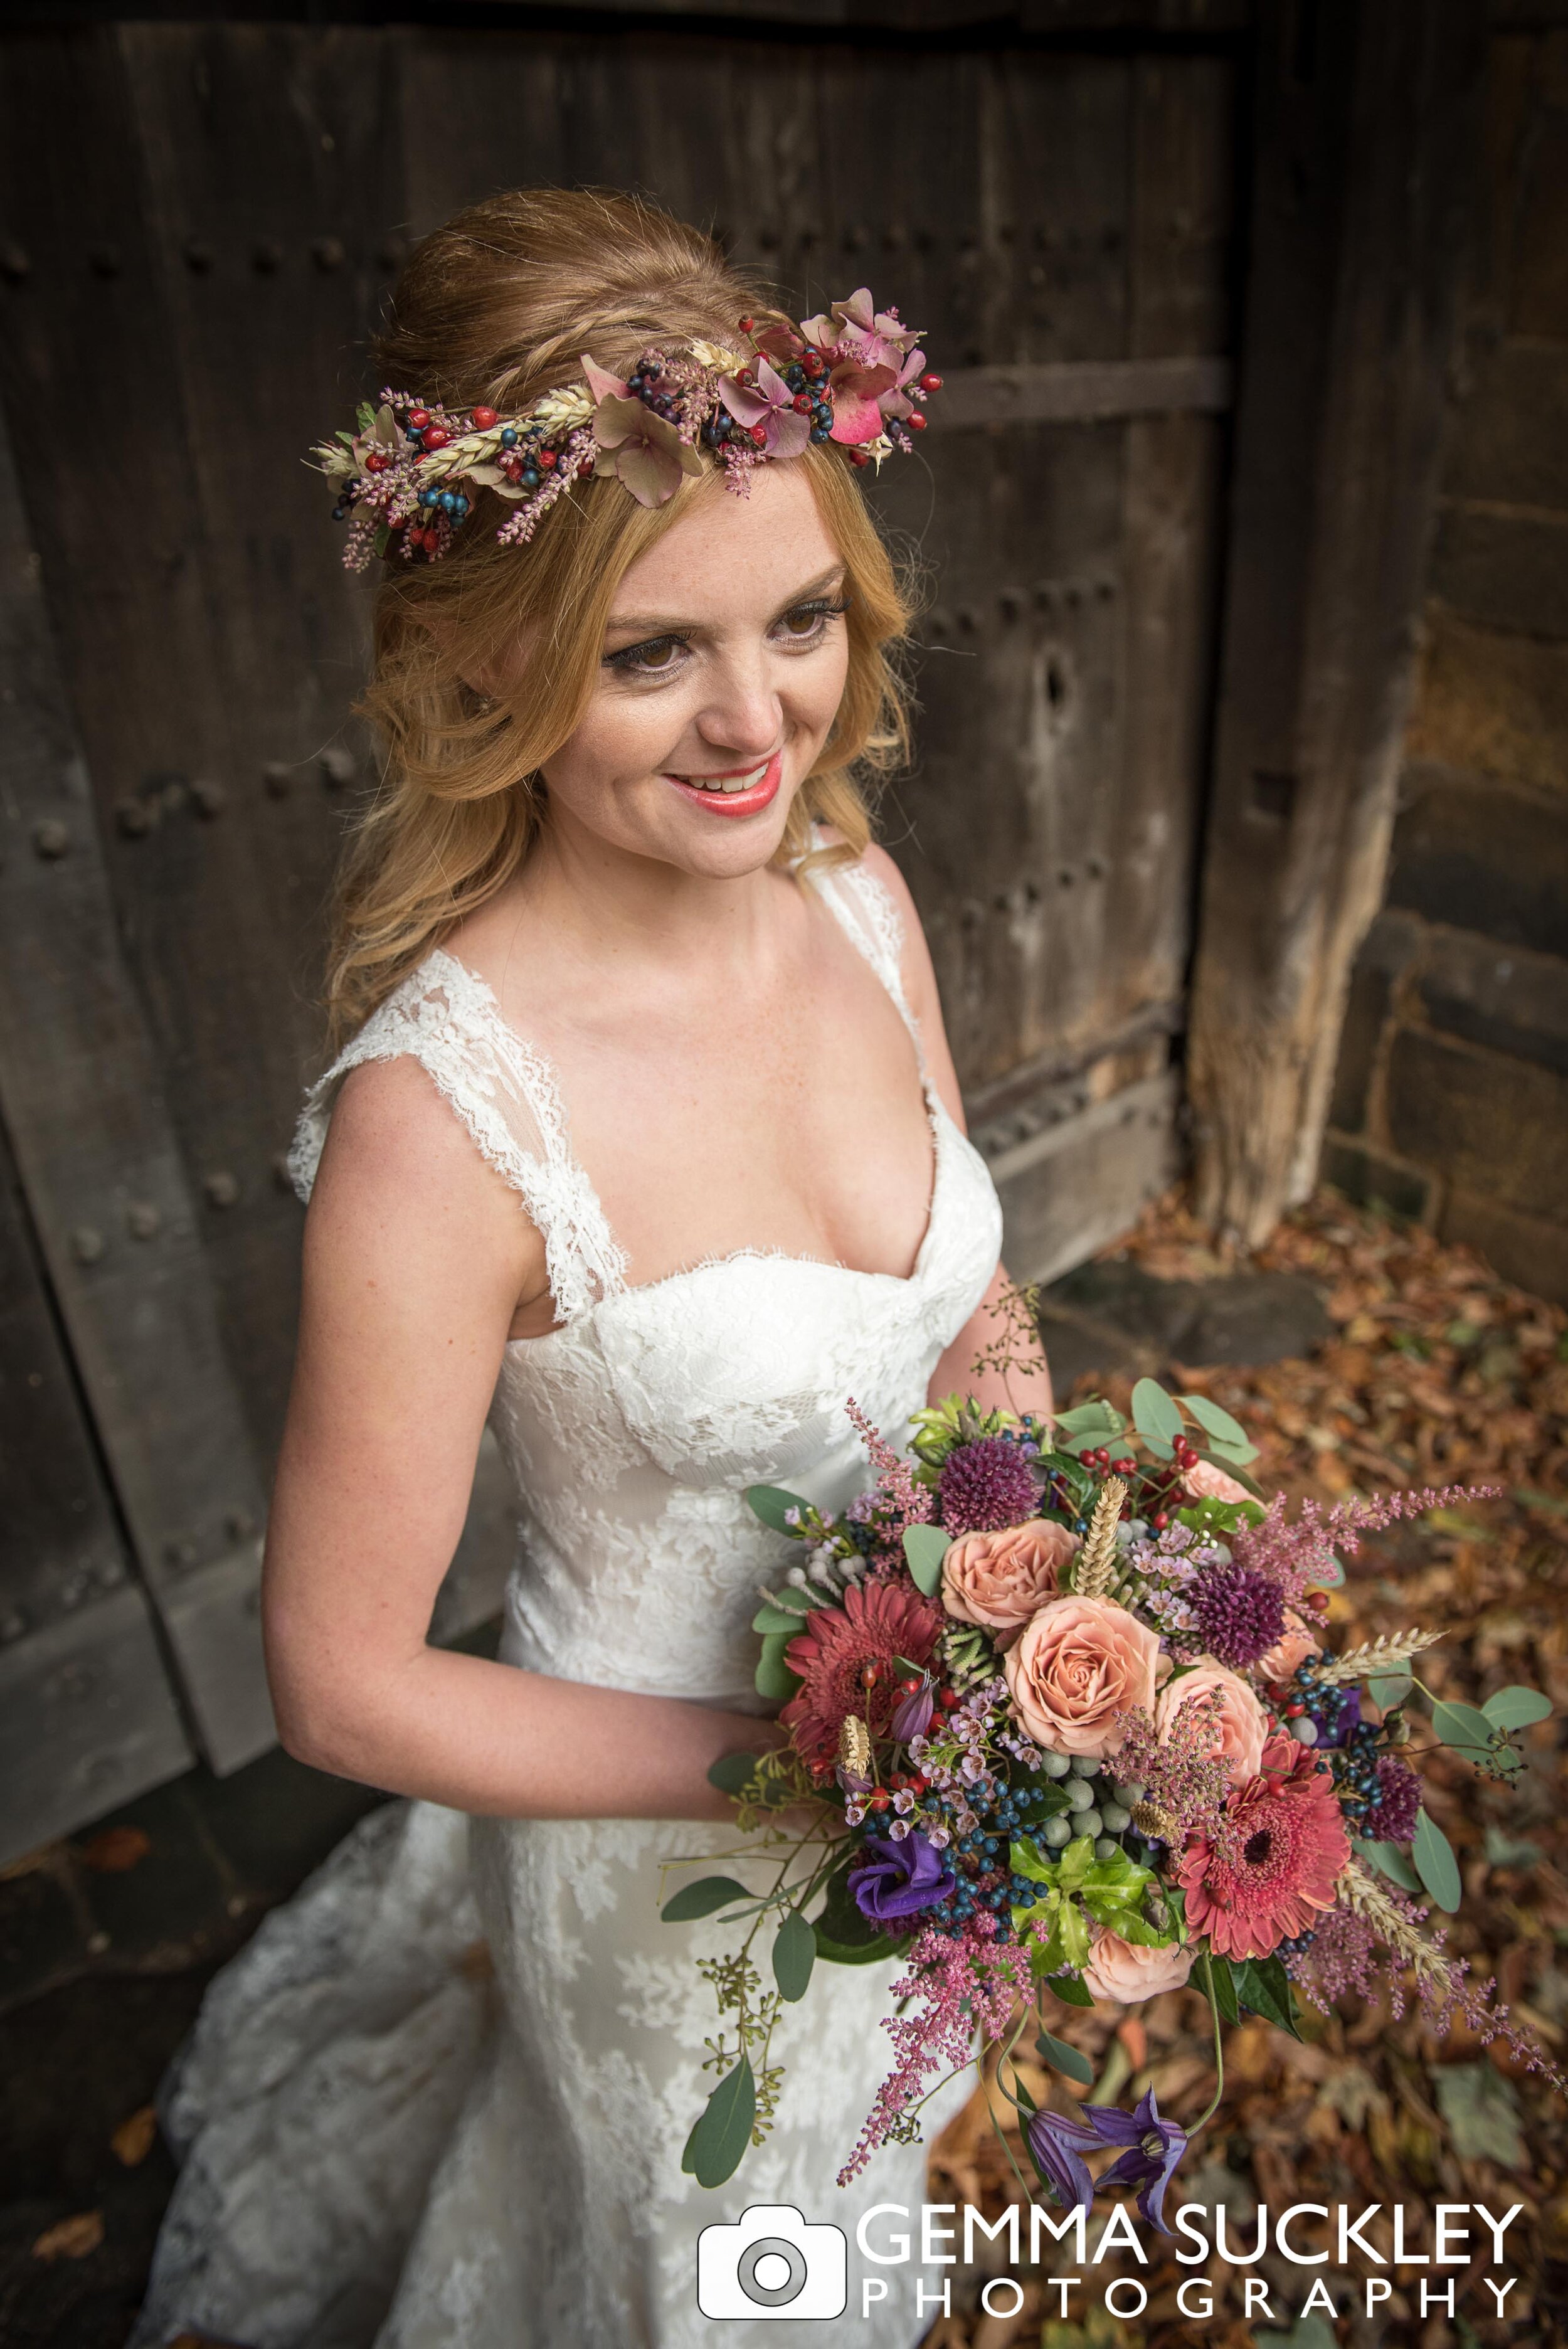 wedding photo of a bride wear a floral crown